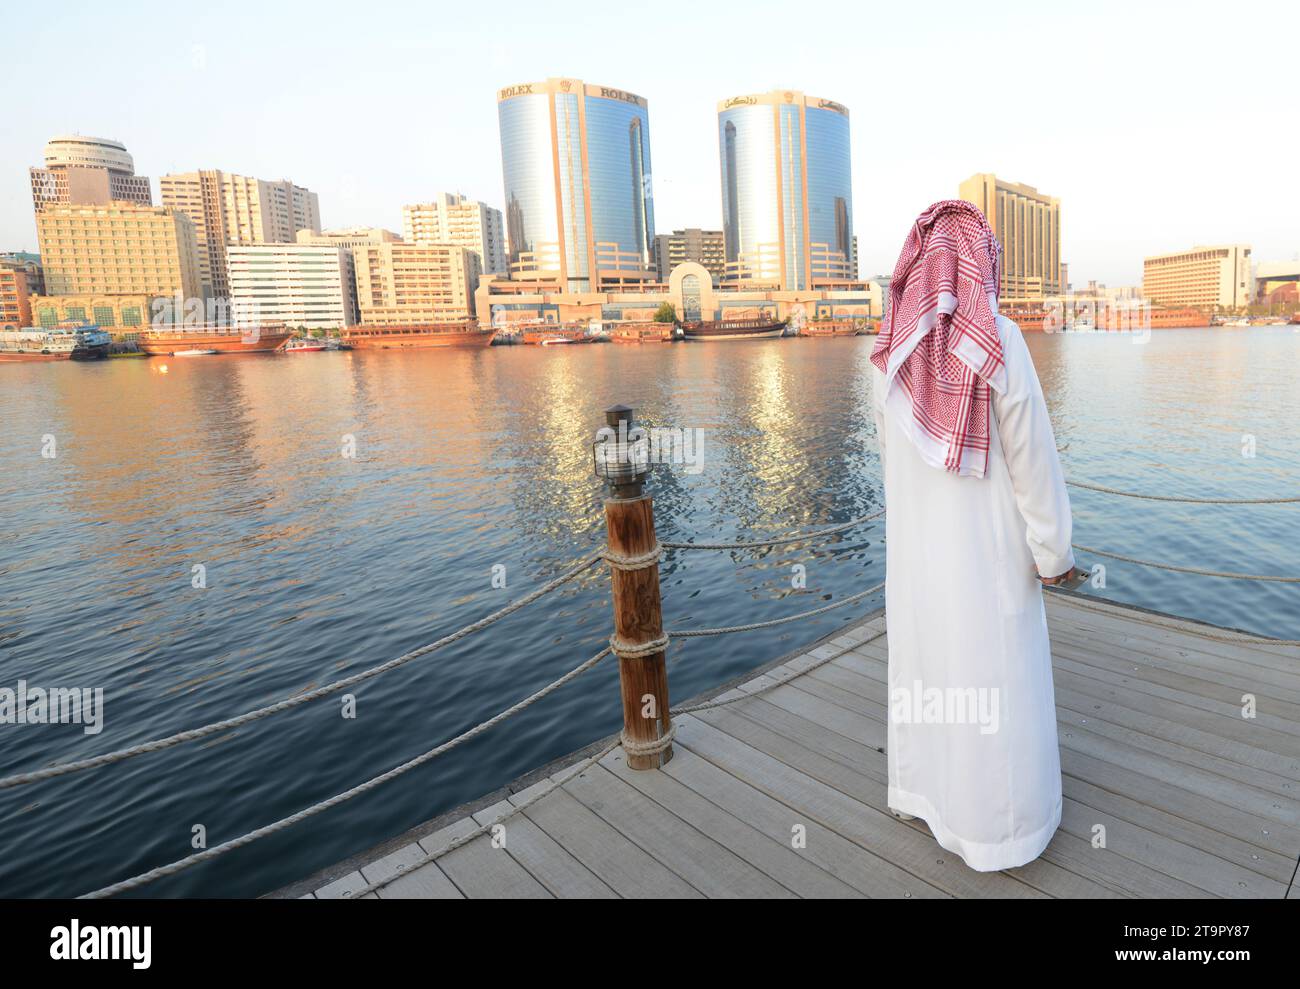 A Saudi man enjoying the views of the Dubai Creek and Deira in Dubai, United Arab Emirates. Stock Photo